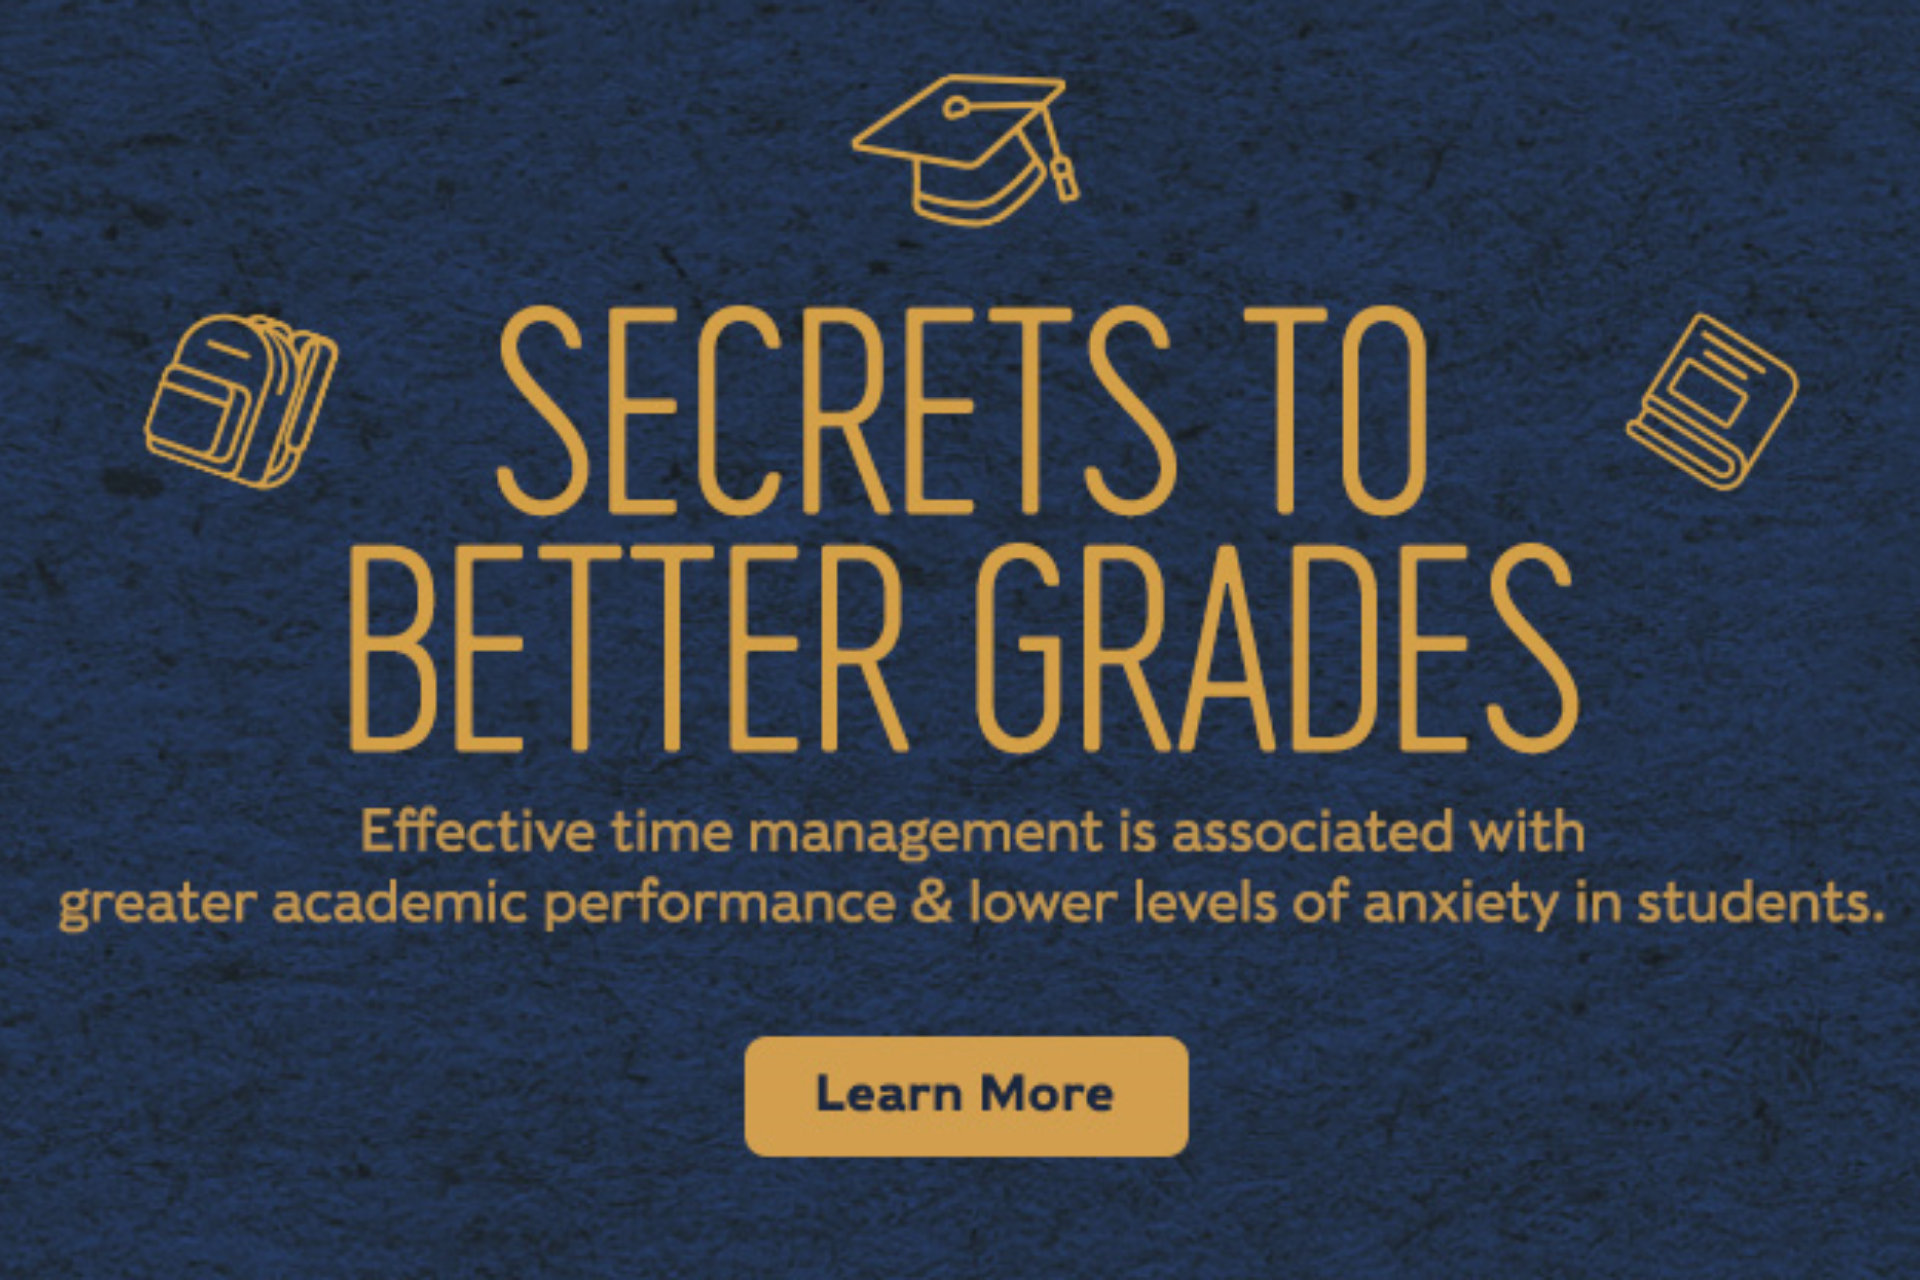 Secrets to better grades